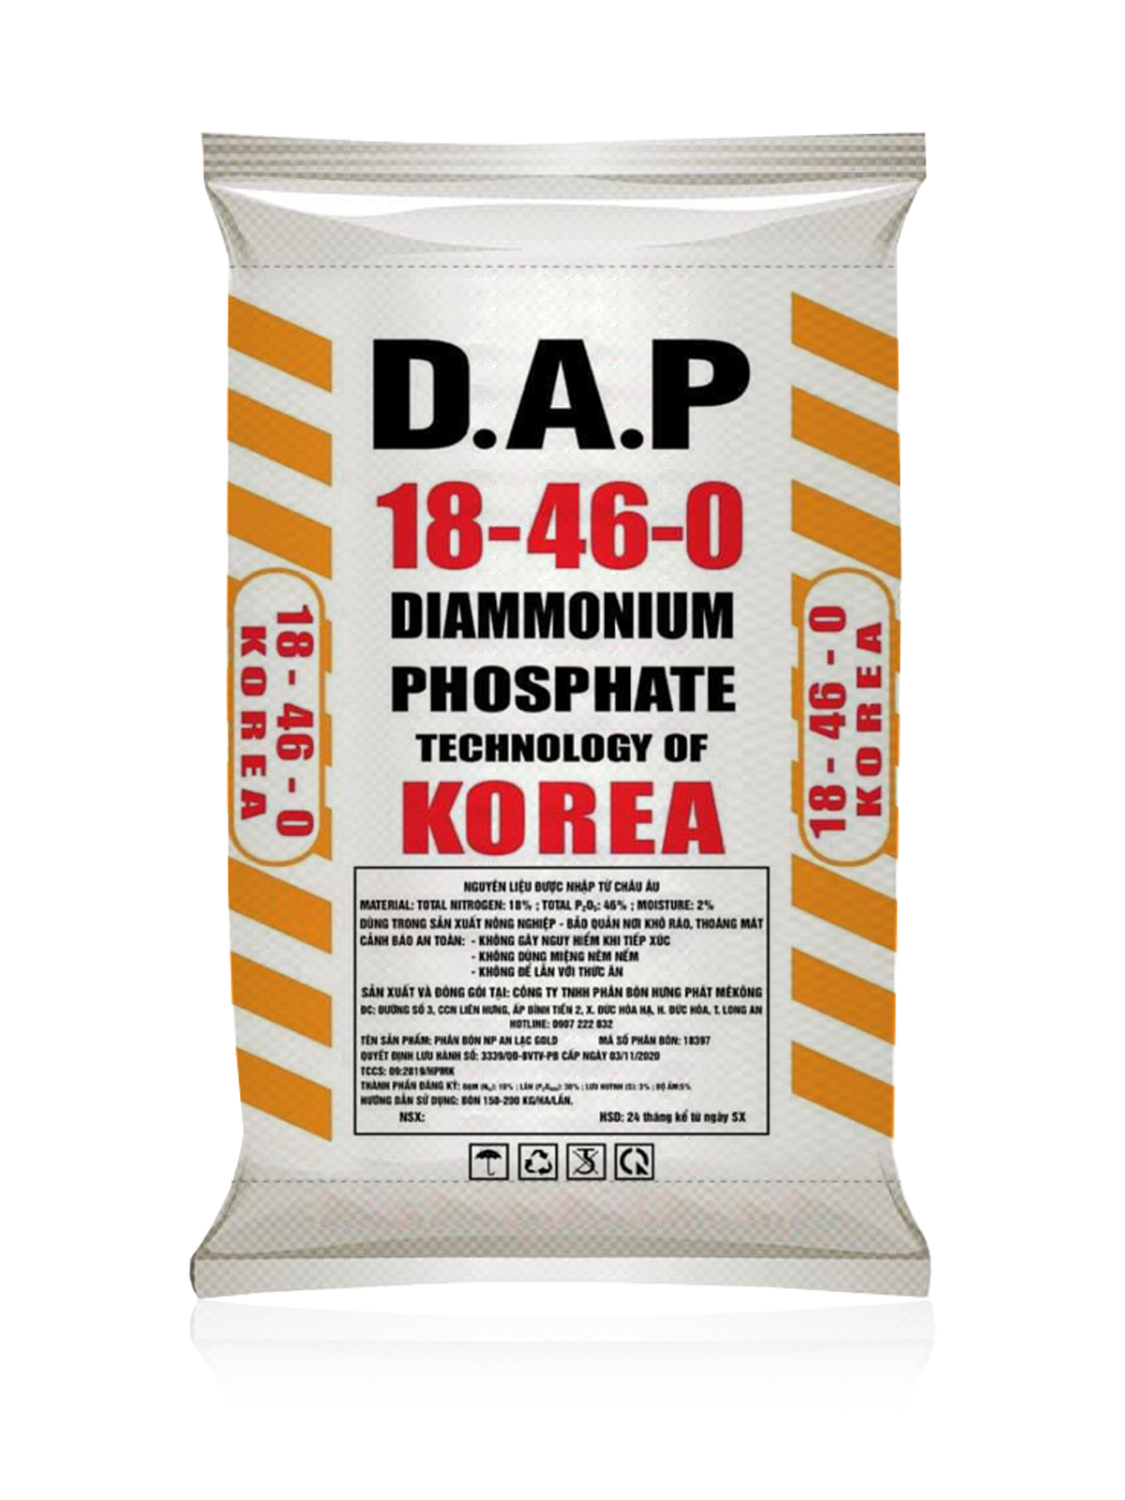 DAP Korea